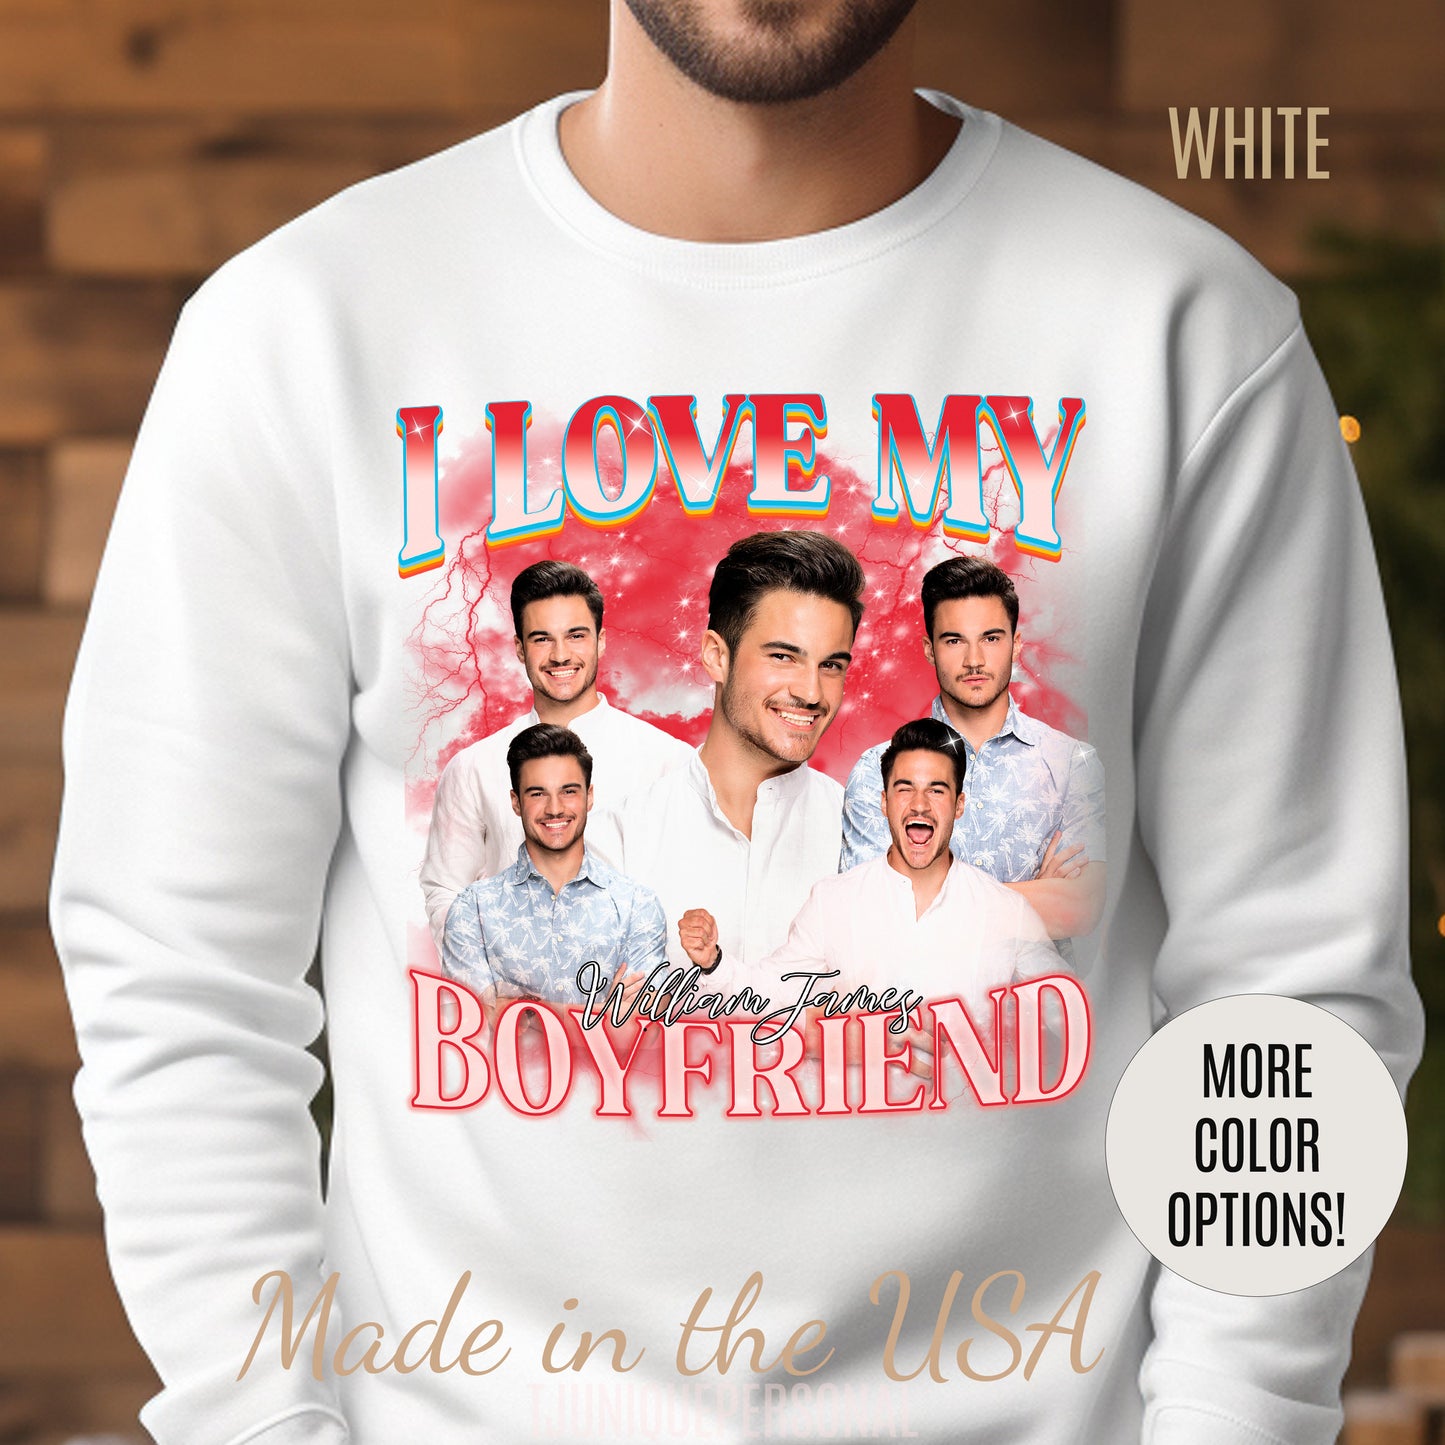 Custom I Love My Boyfriend Sweatshirt, Customized Photo Bootleg Rap Sweatshirt, Valentine Matching Couple Sweatshirt, S1358